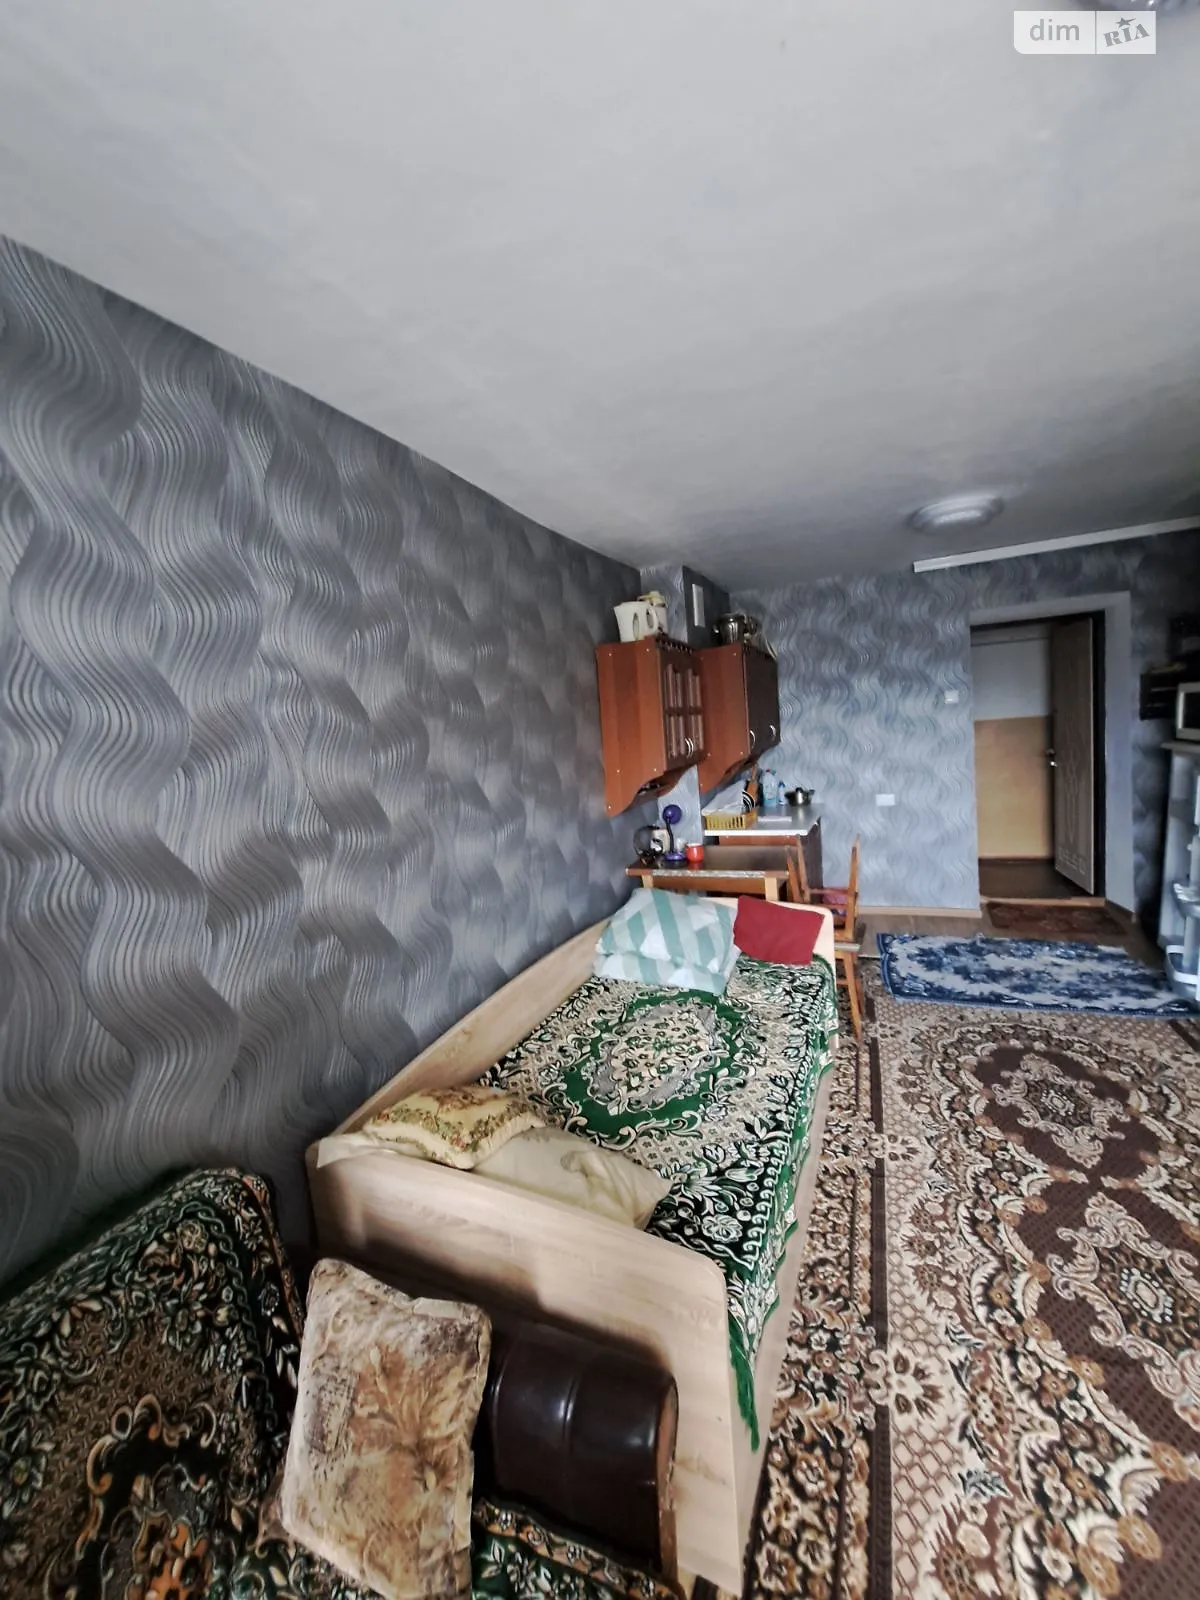 Продается комната 17.8 кв. м в Николаеве - фото 3